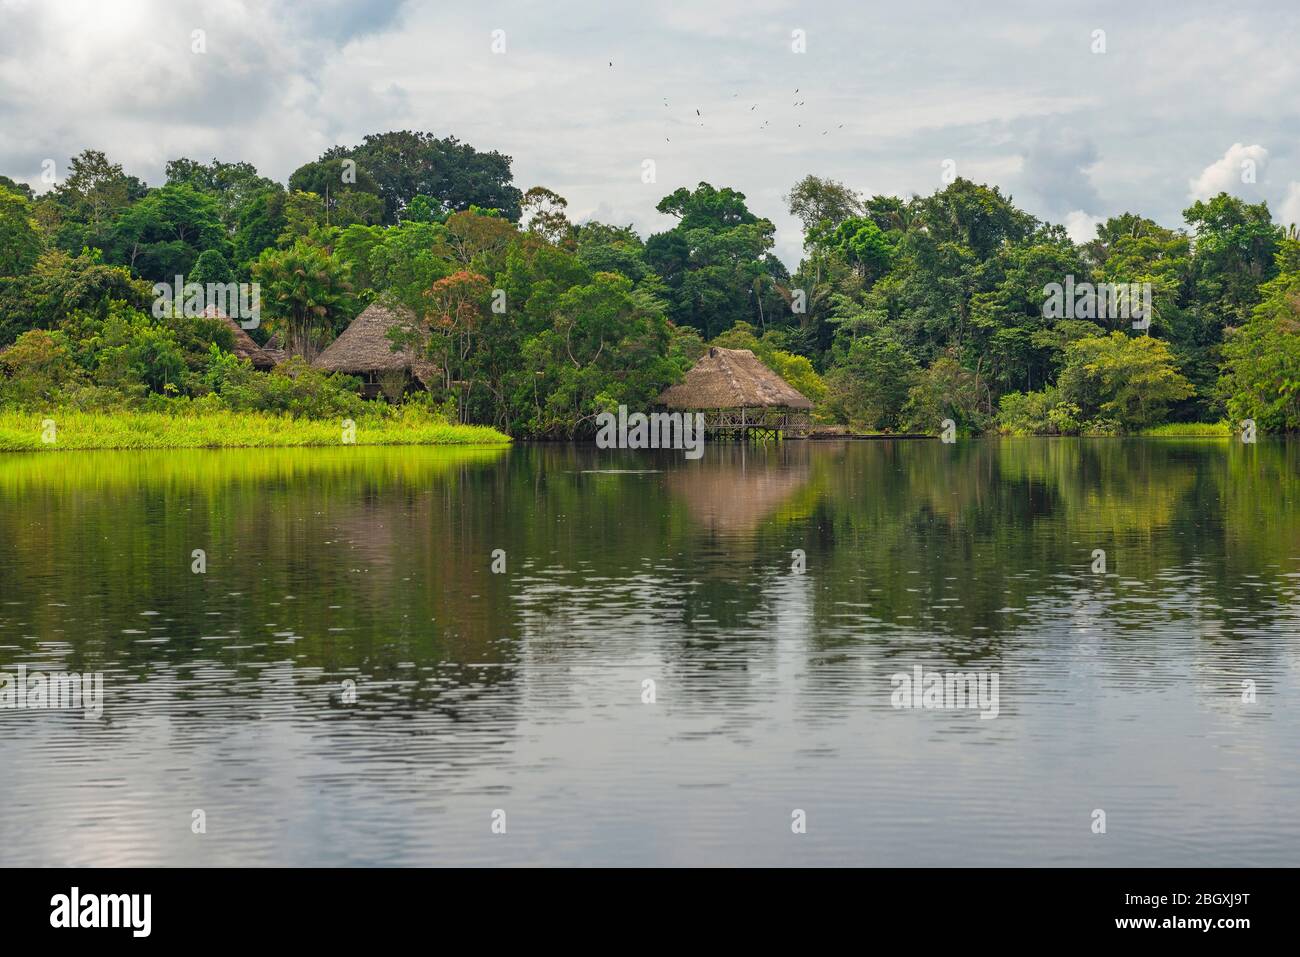 Amazon Rainforest Lodge Reflection. The Amazon Region comprise Suriname, Guyana, French Guyana, Venezuela, Colombia, Ecuador, Peru, Bolivia and Brazil. Stock Photo